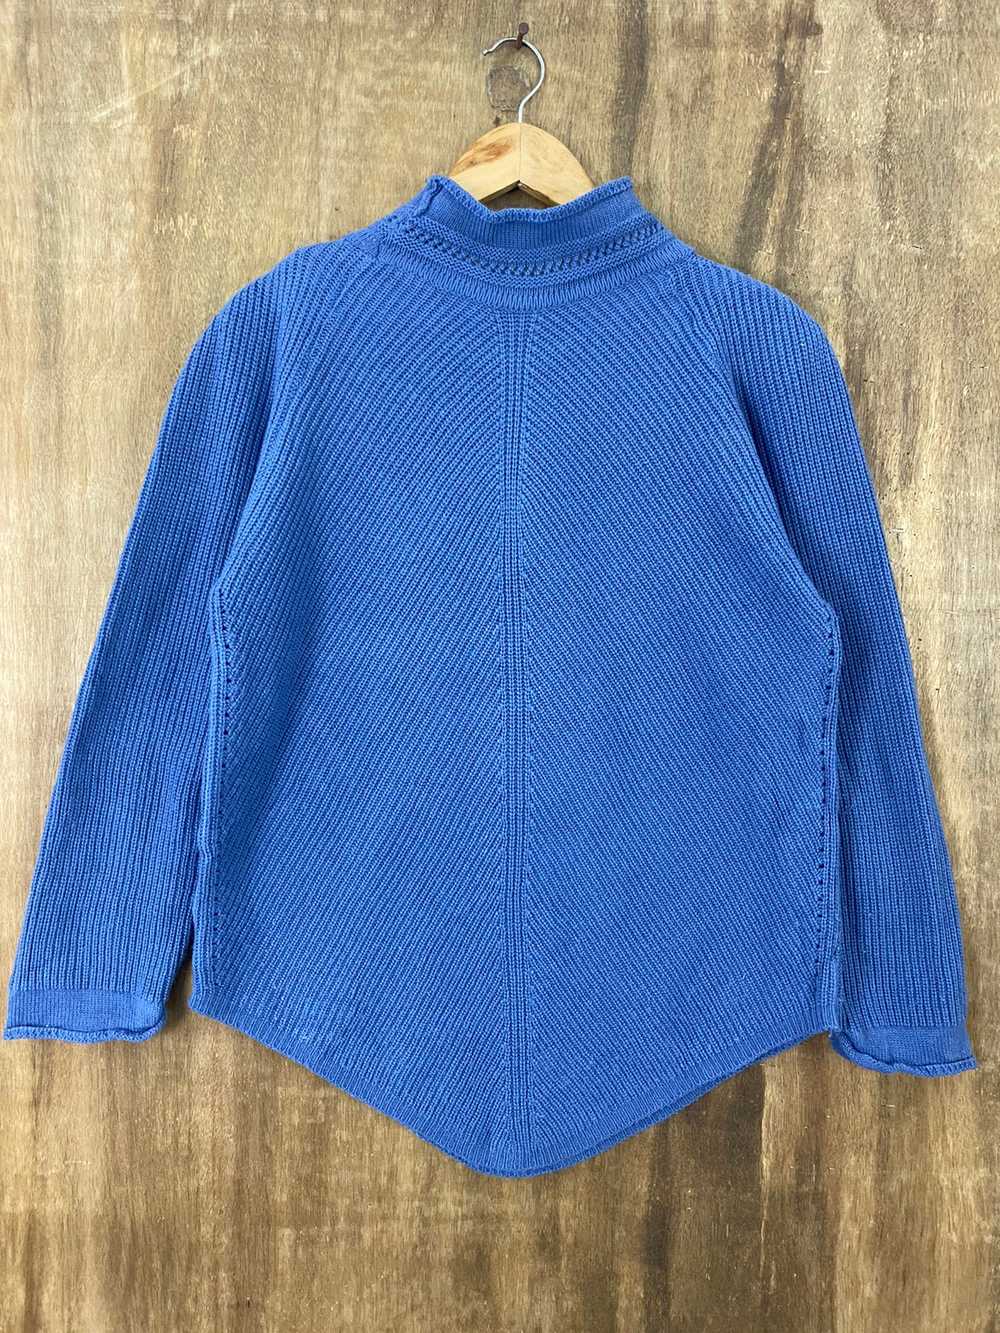 Homespun Knitwear - Japanese Brand Blue Knit Swea… - image 2